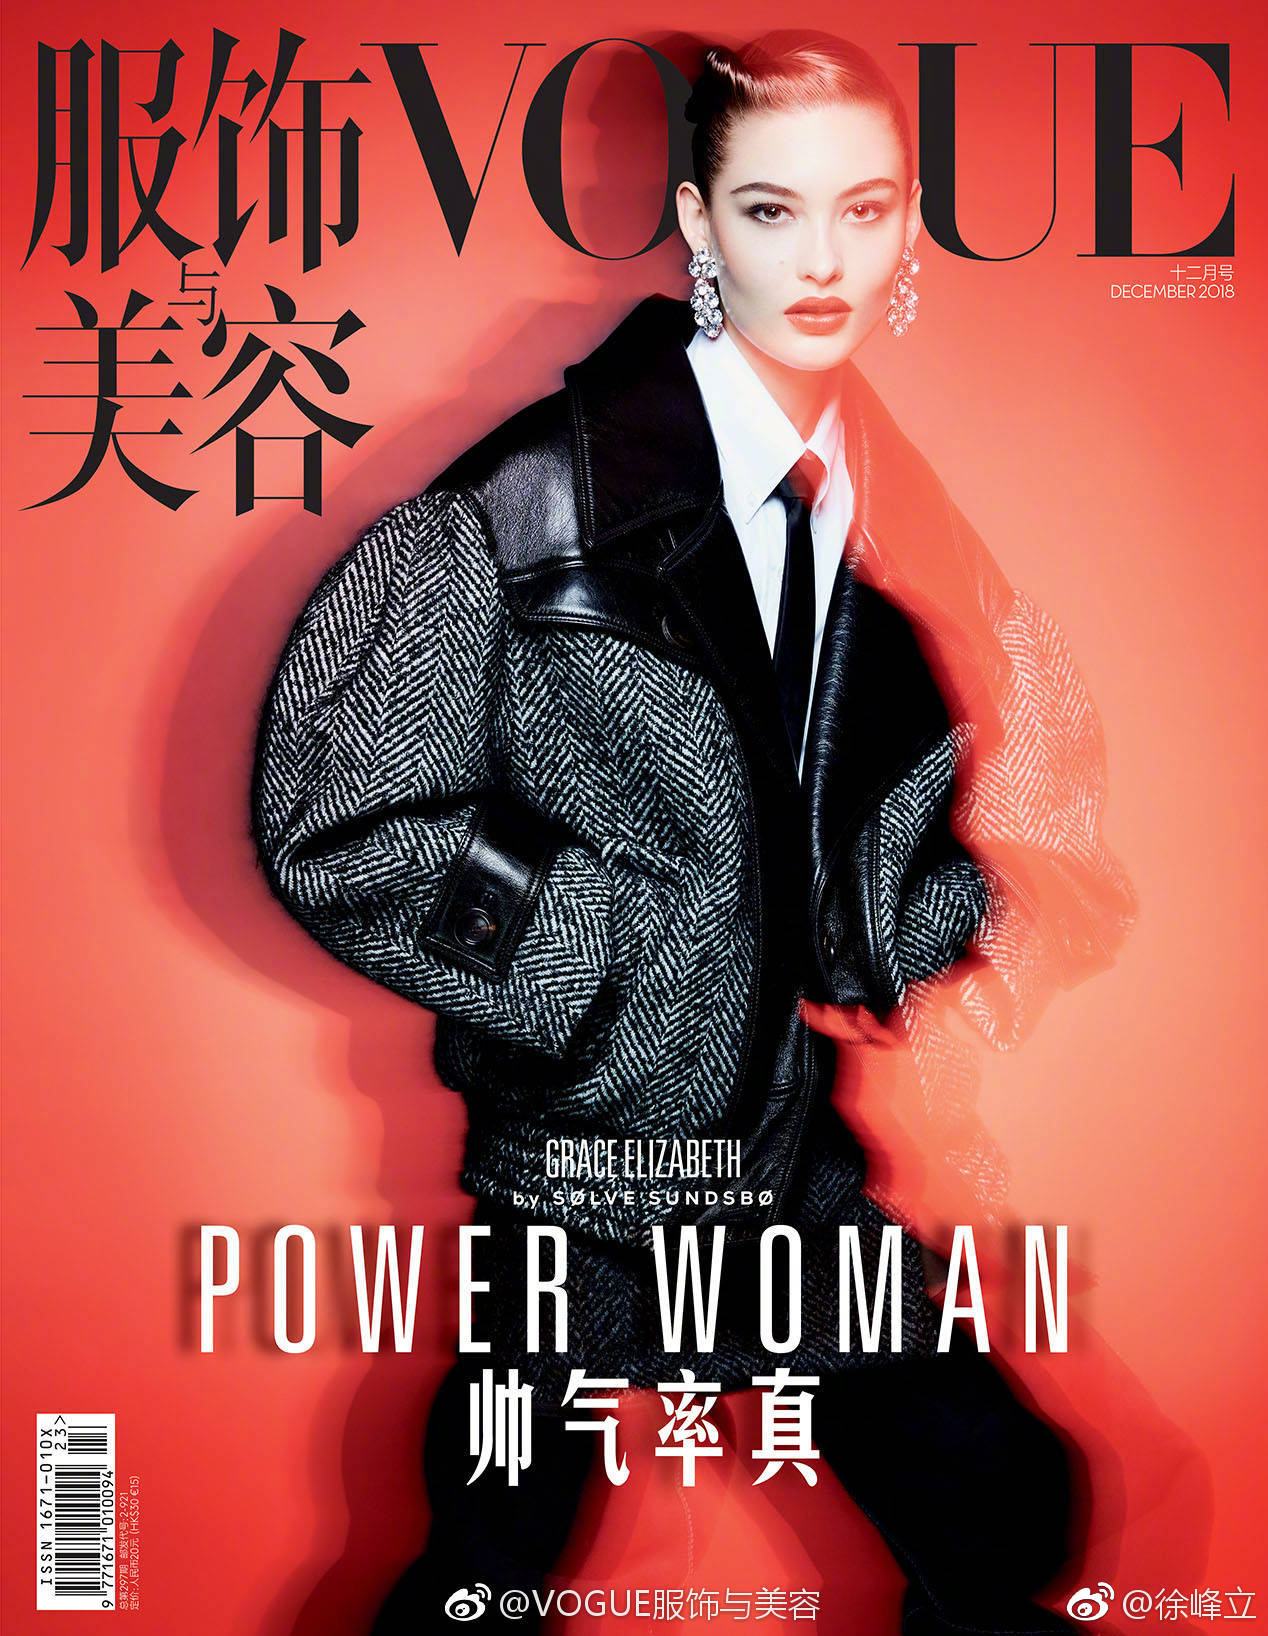 WOW! @i周迅 登上《Vogue服饰与美容》3月刊封面……|Vogue服饰与美容|周迅|封面_新浪新闻